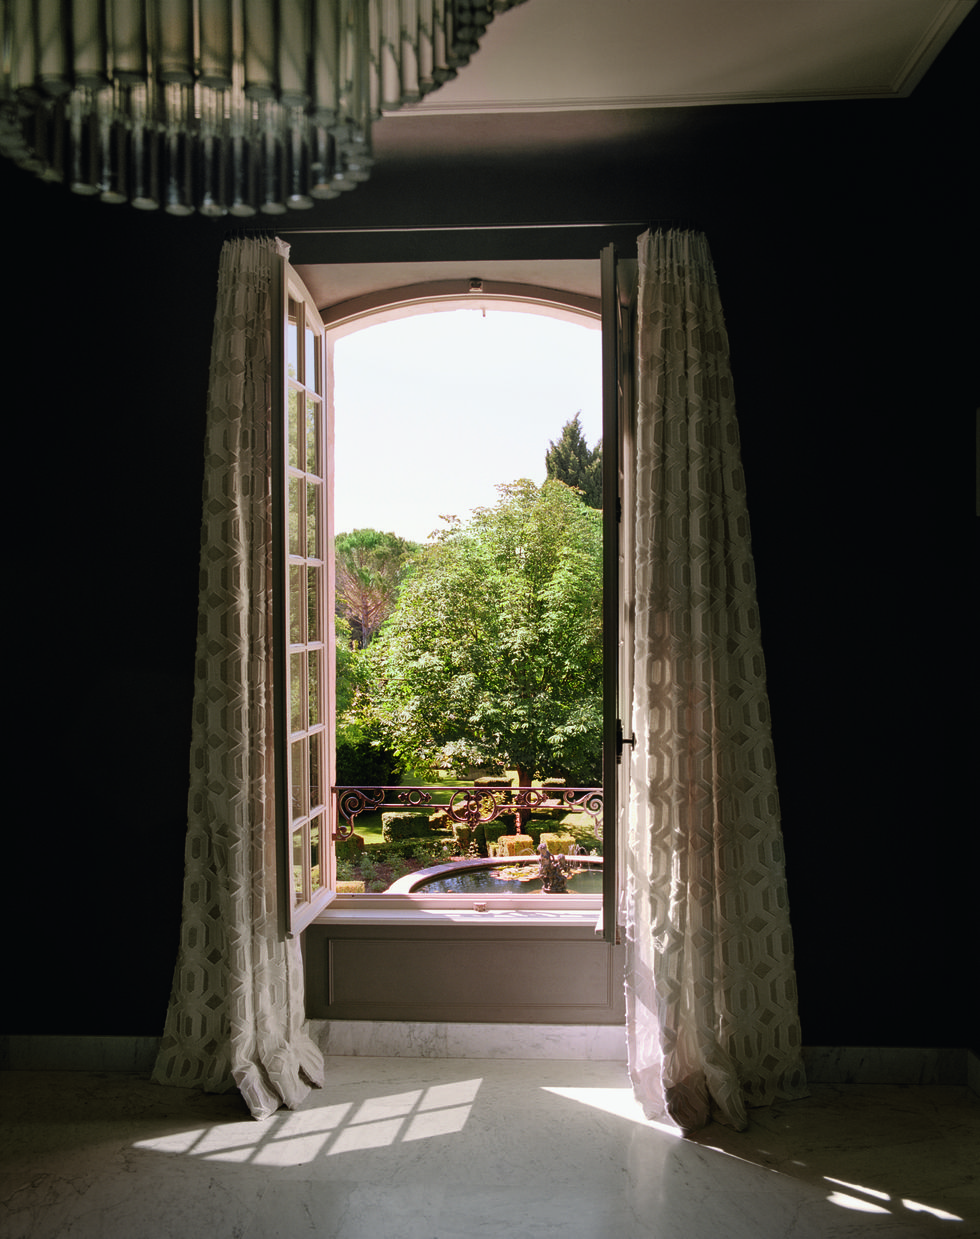 Curtain, Light, Window treatment, Interior design, Window, Tree, House, Textile, Architecture, Room, 